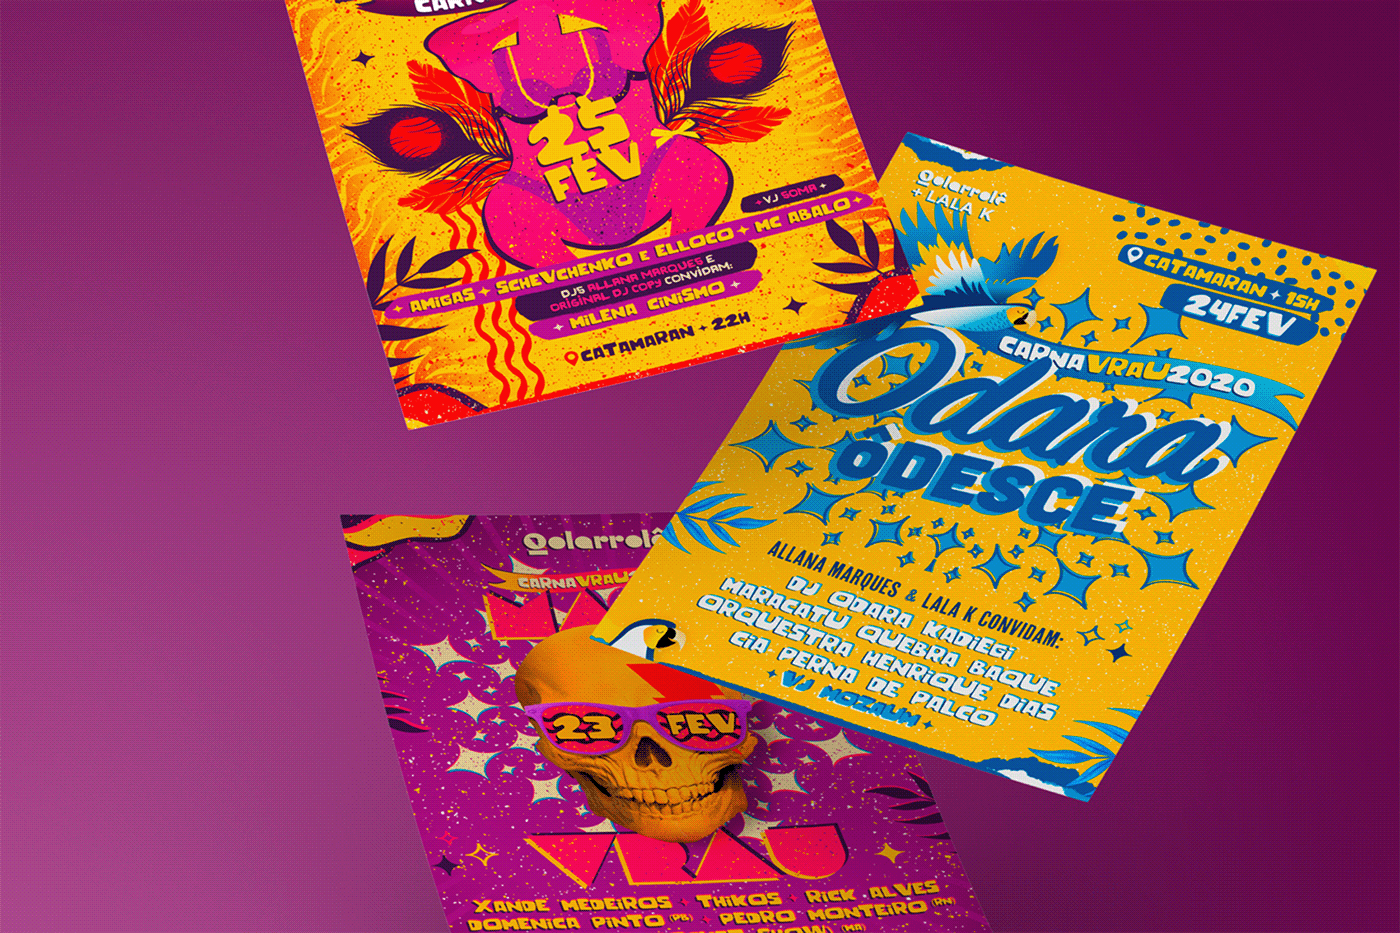 Carnaval Direção Criativa Direção de arte flyers posters design Graphic Designer dirección de arte creatividad diseño gráfico